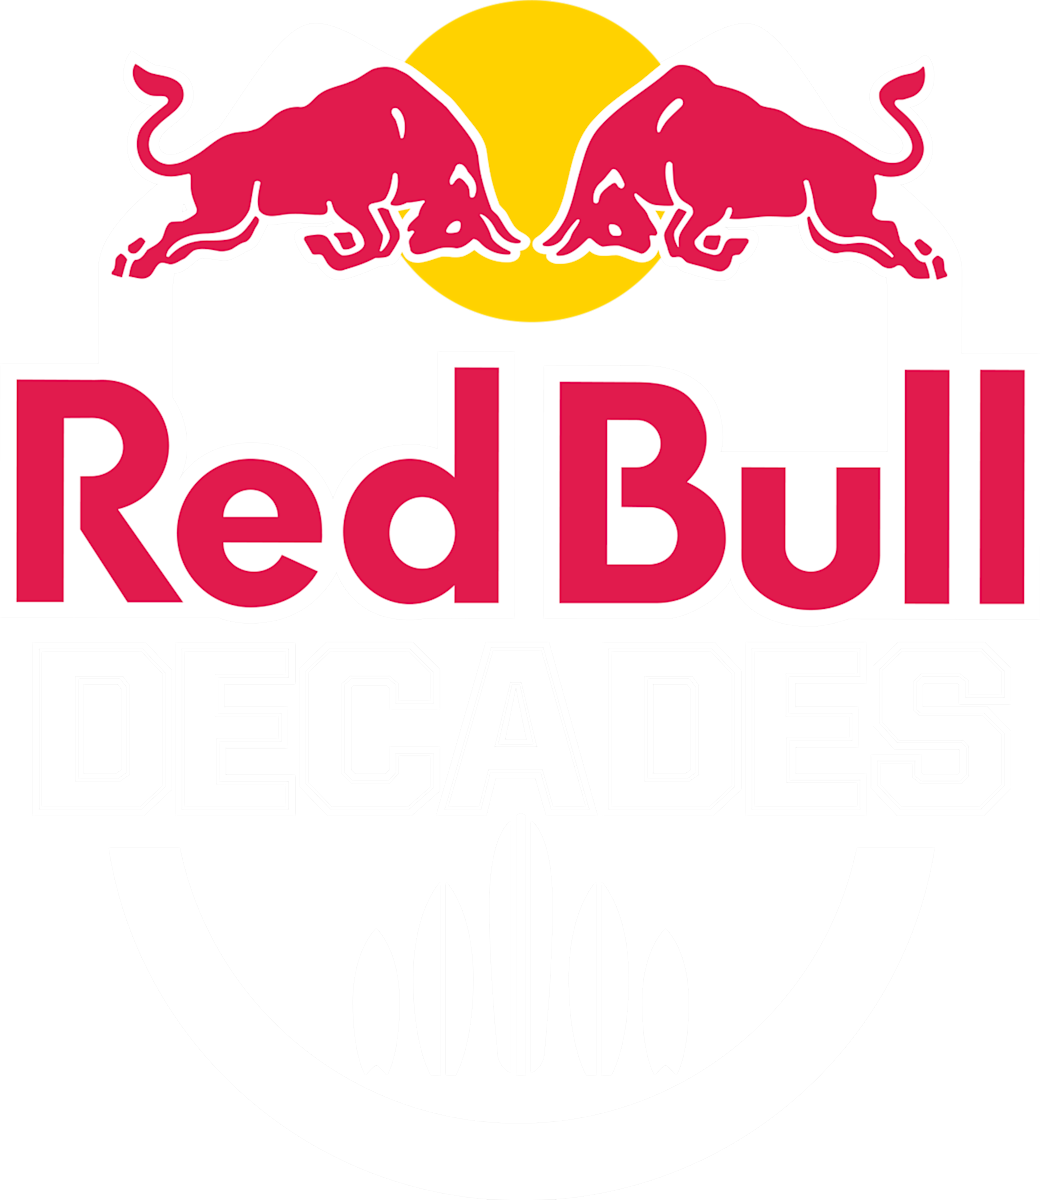 Red Bull Decades